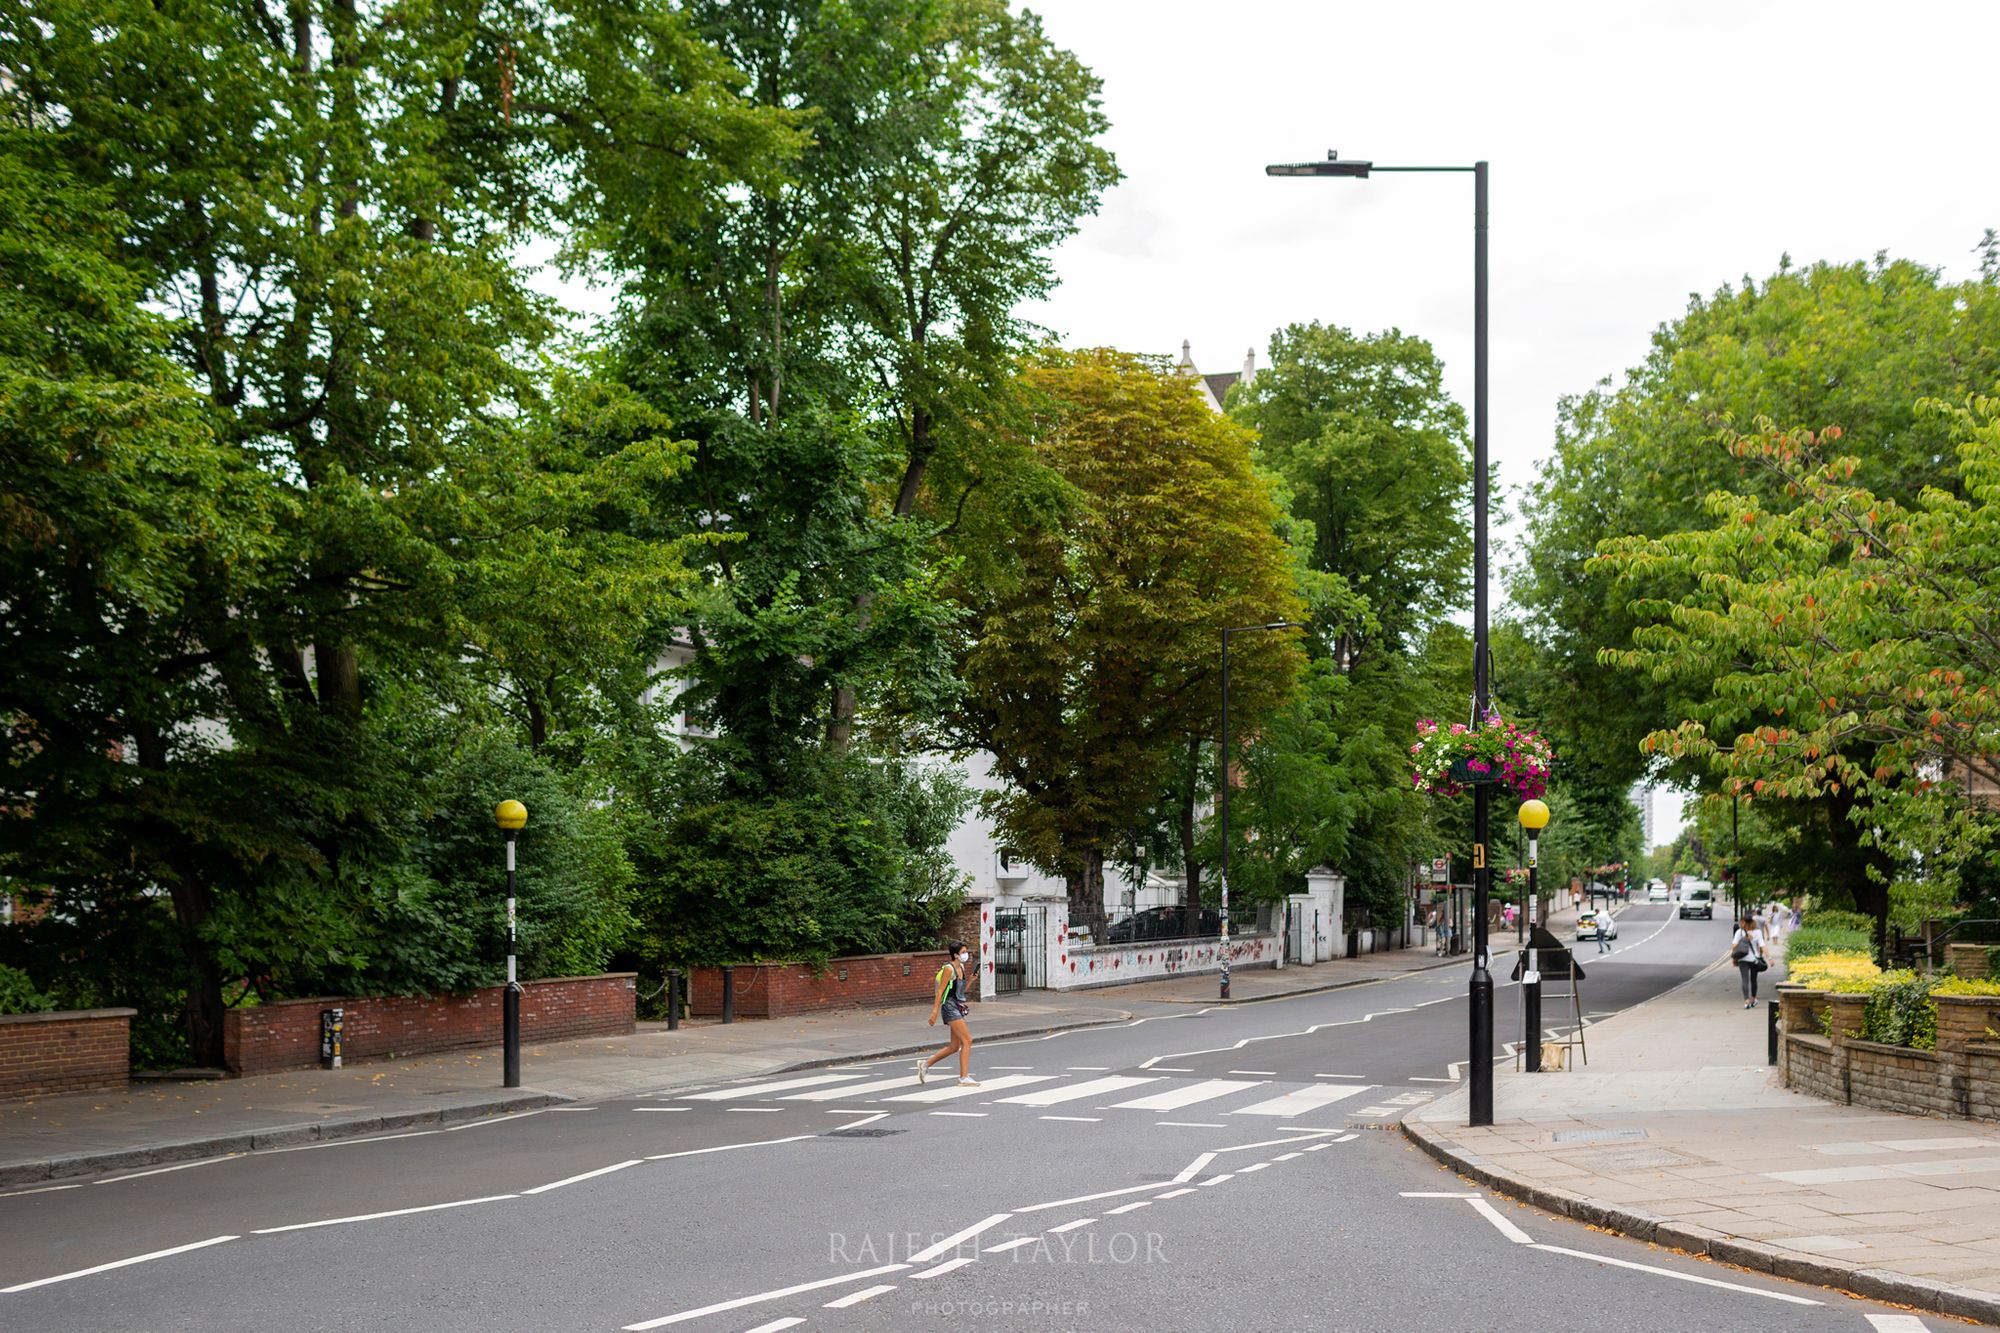 Abbey Road Zebra Crossing, Marylebone © Rajesh Taylor